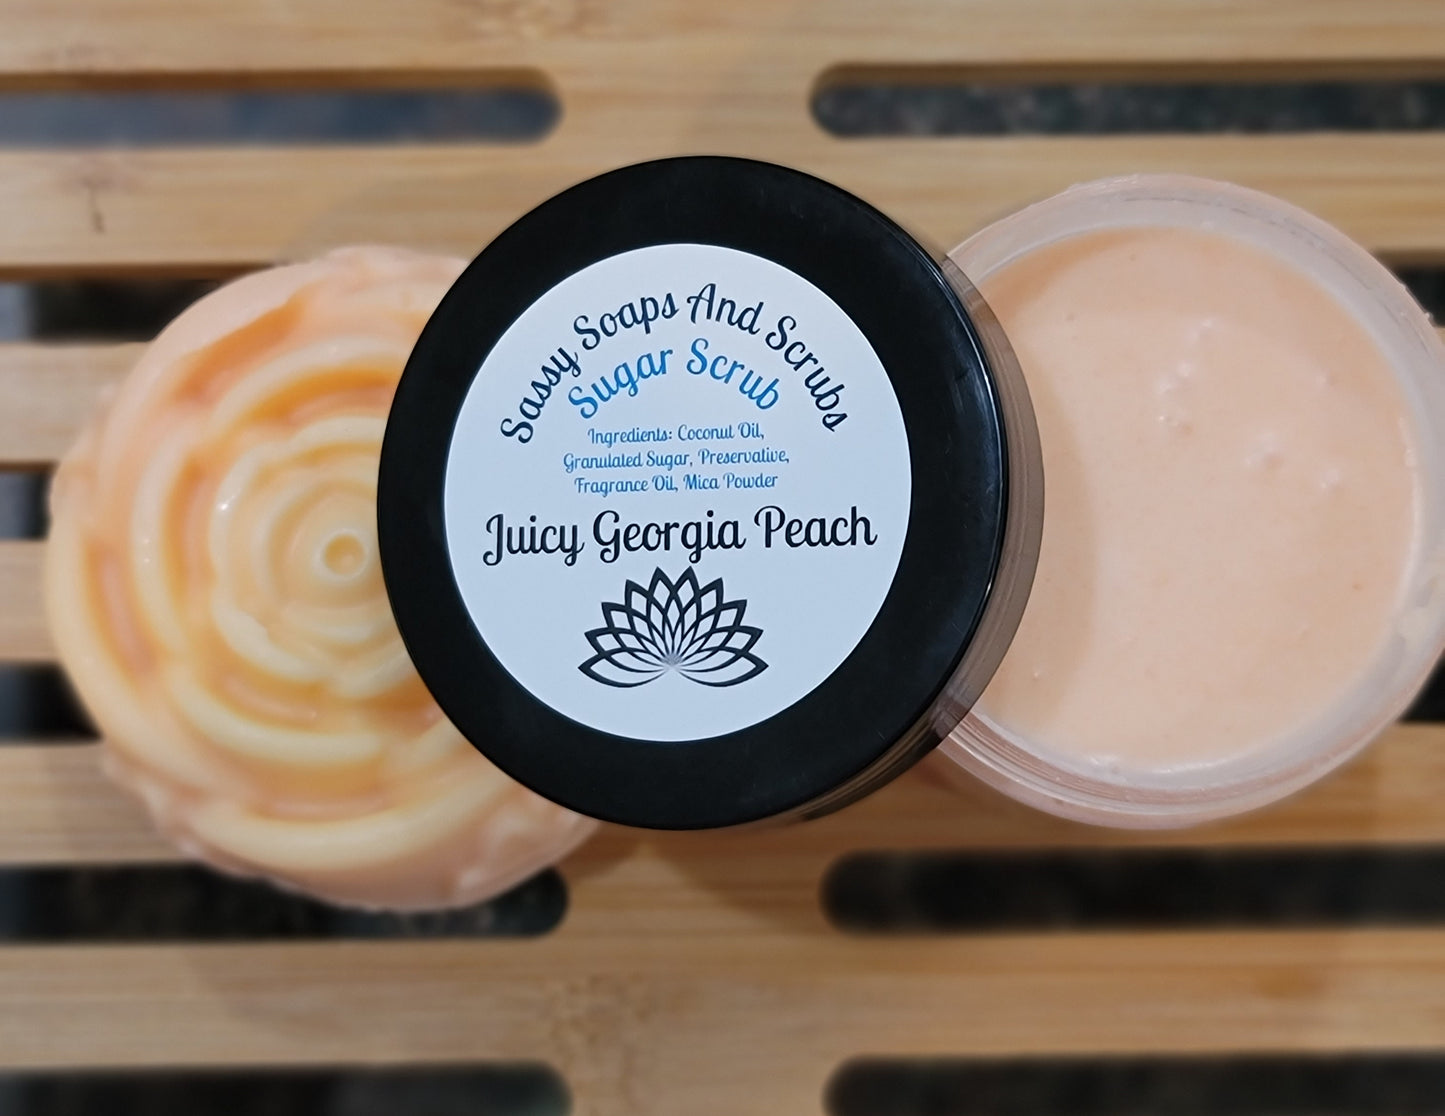 Juicy Georgia Peach 🍑 (Our version of BBW)